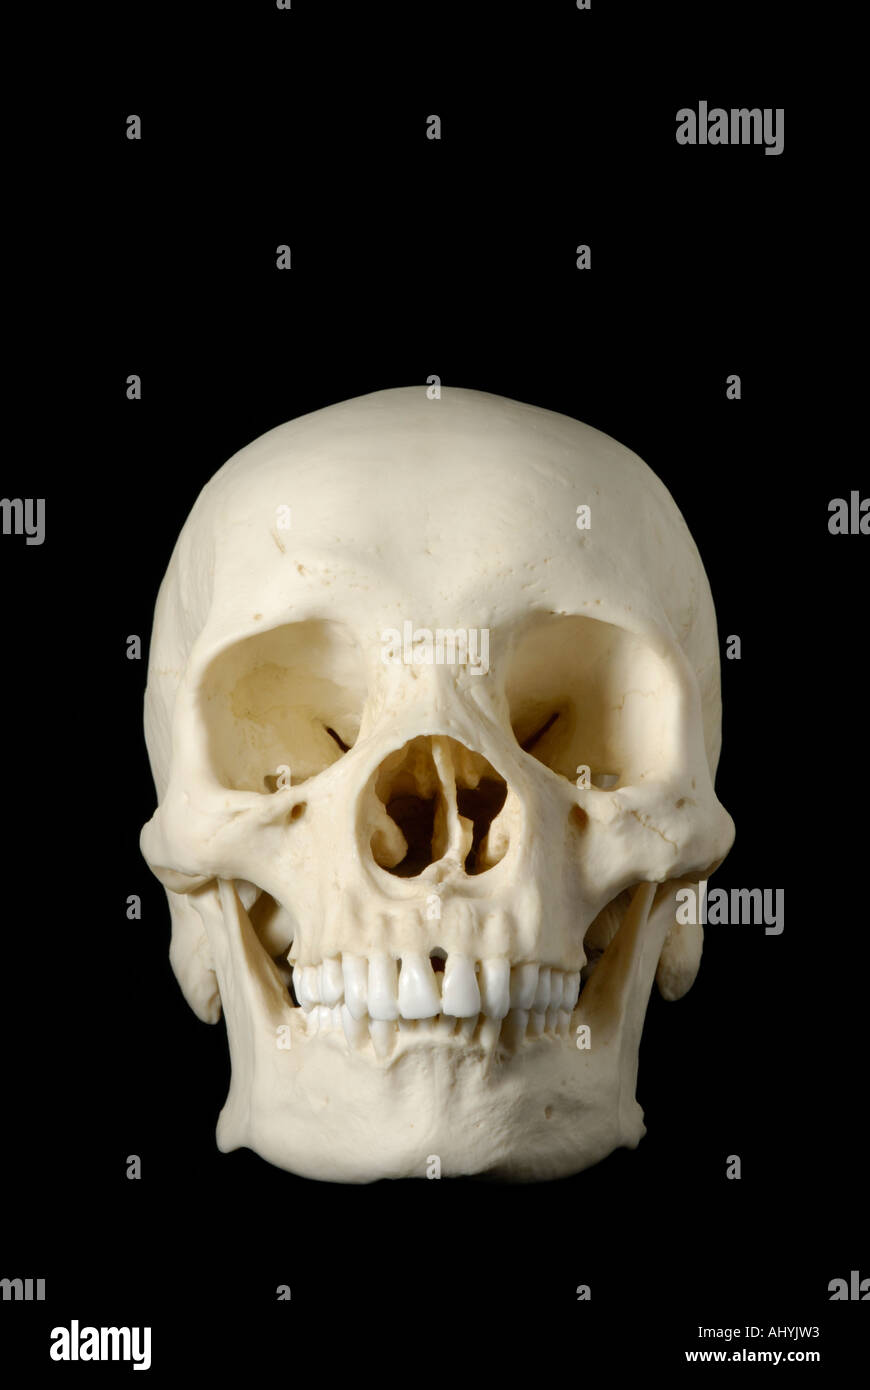 Modelo de cráneo humano contra fondo negro Foto de stock